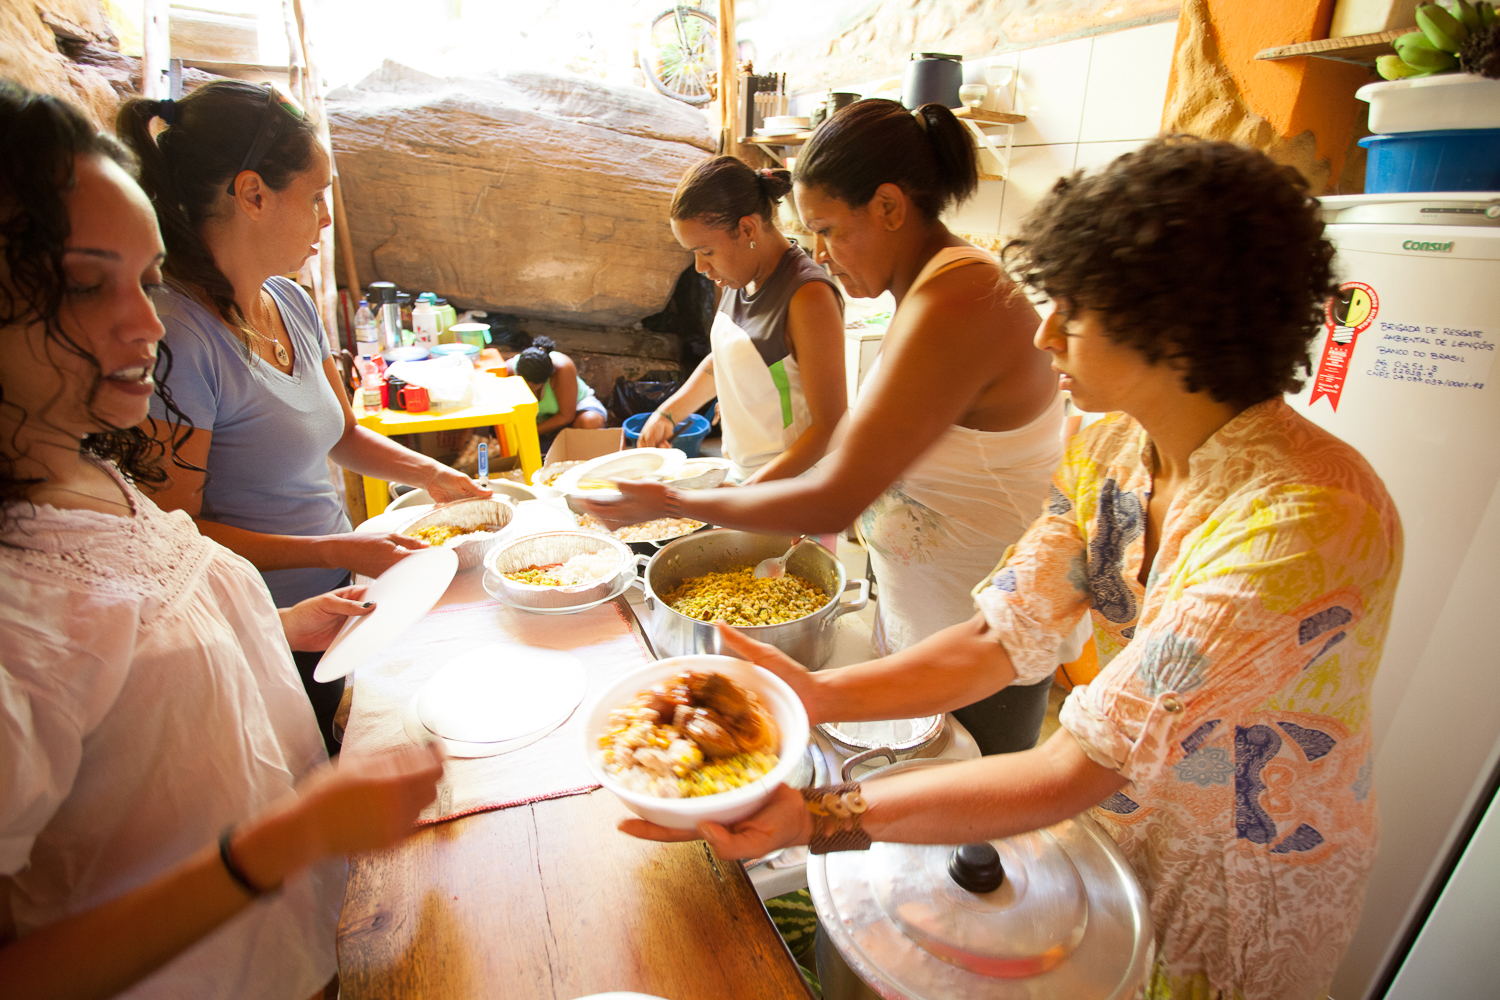 Volunteers work in Ferrera’s kitchen preparing meals for the brigadistas. Photo by Aćony Santos